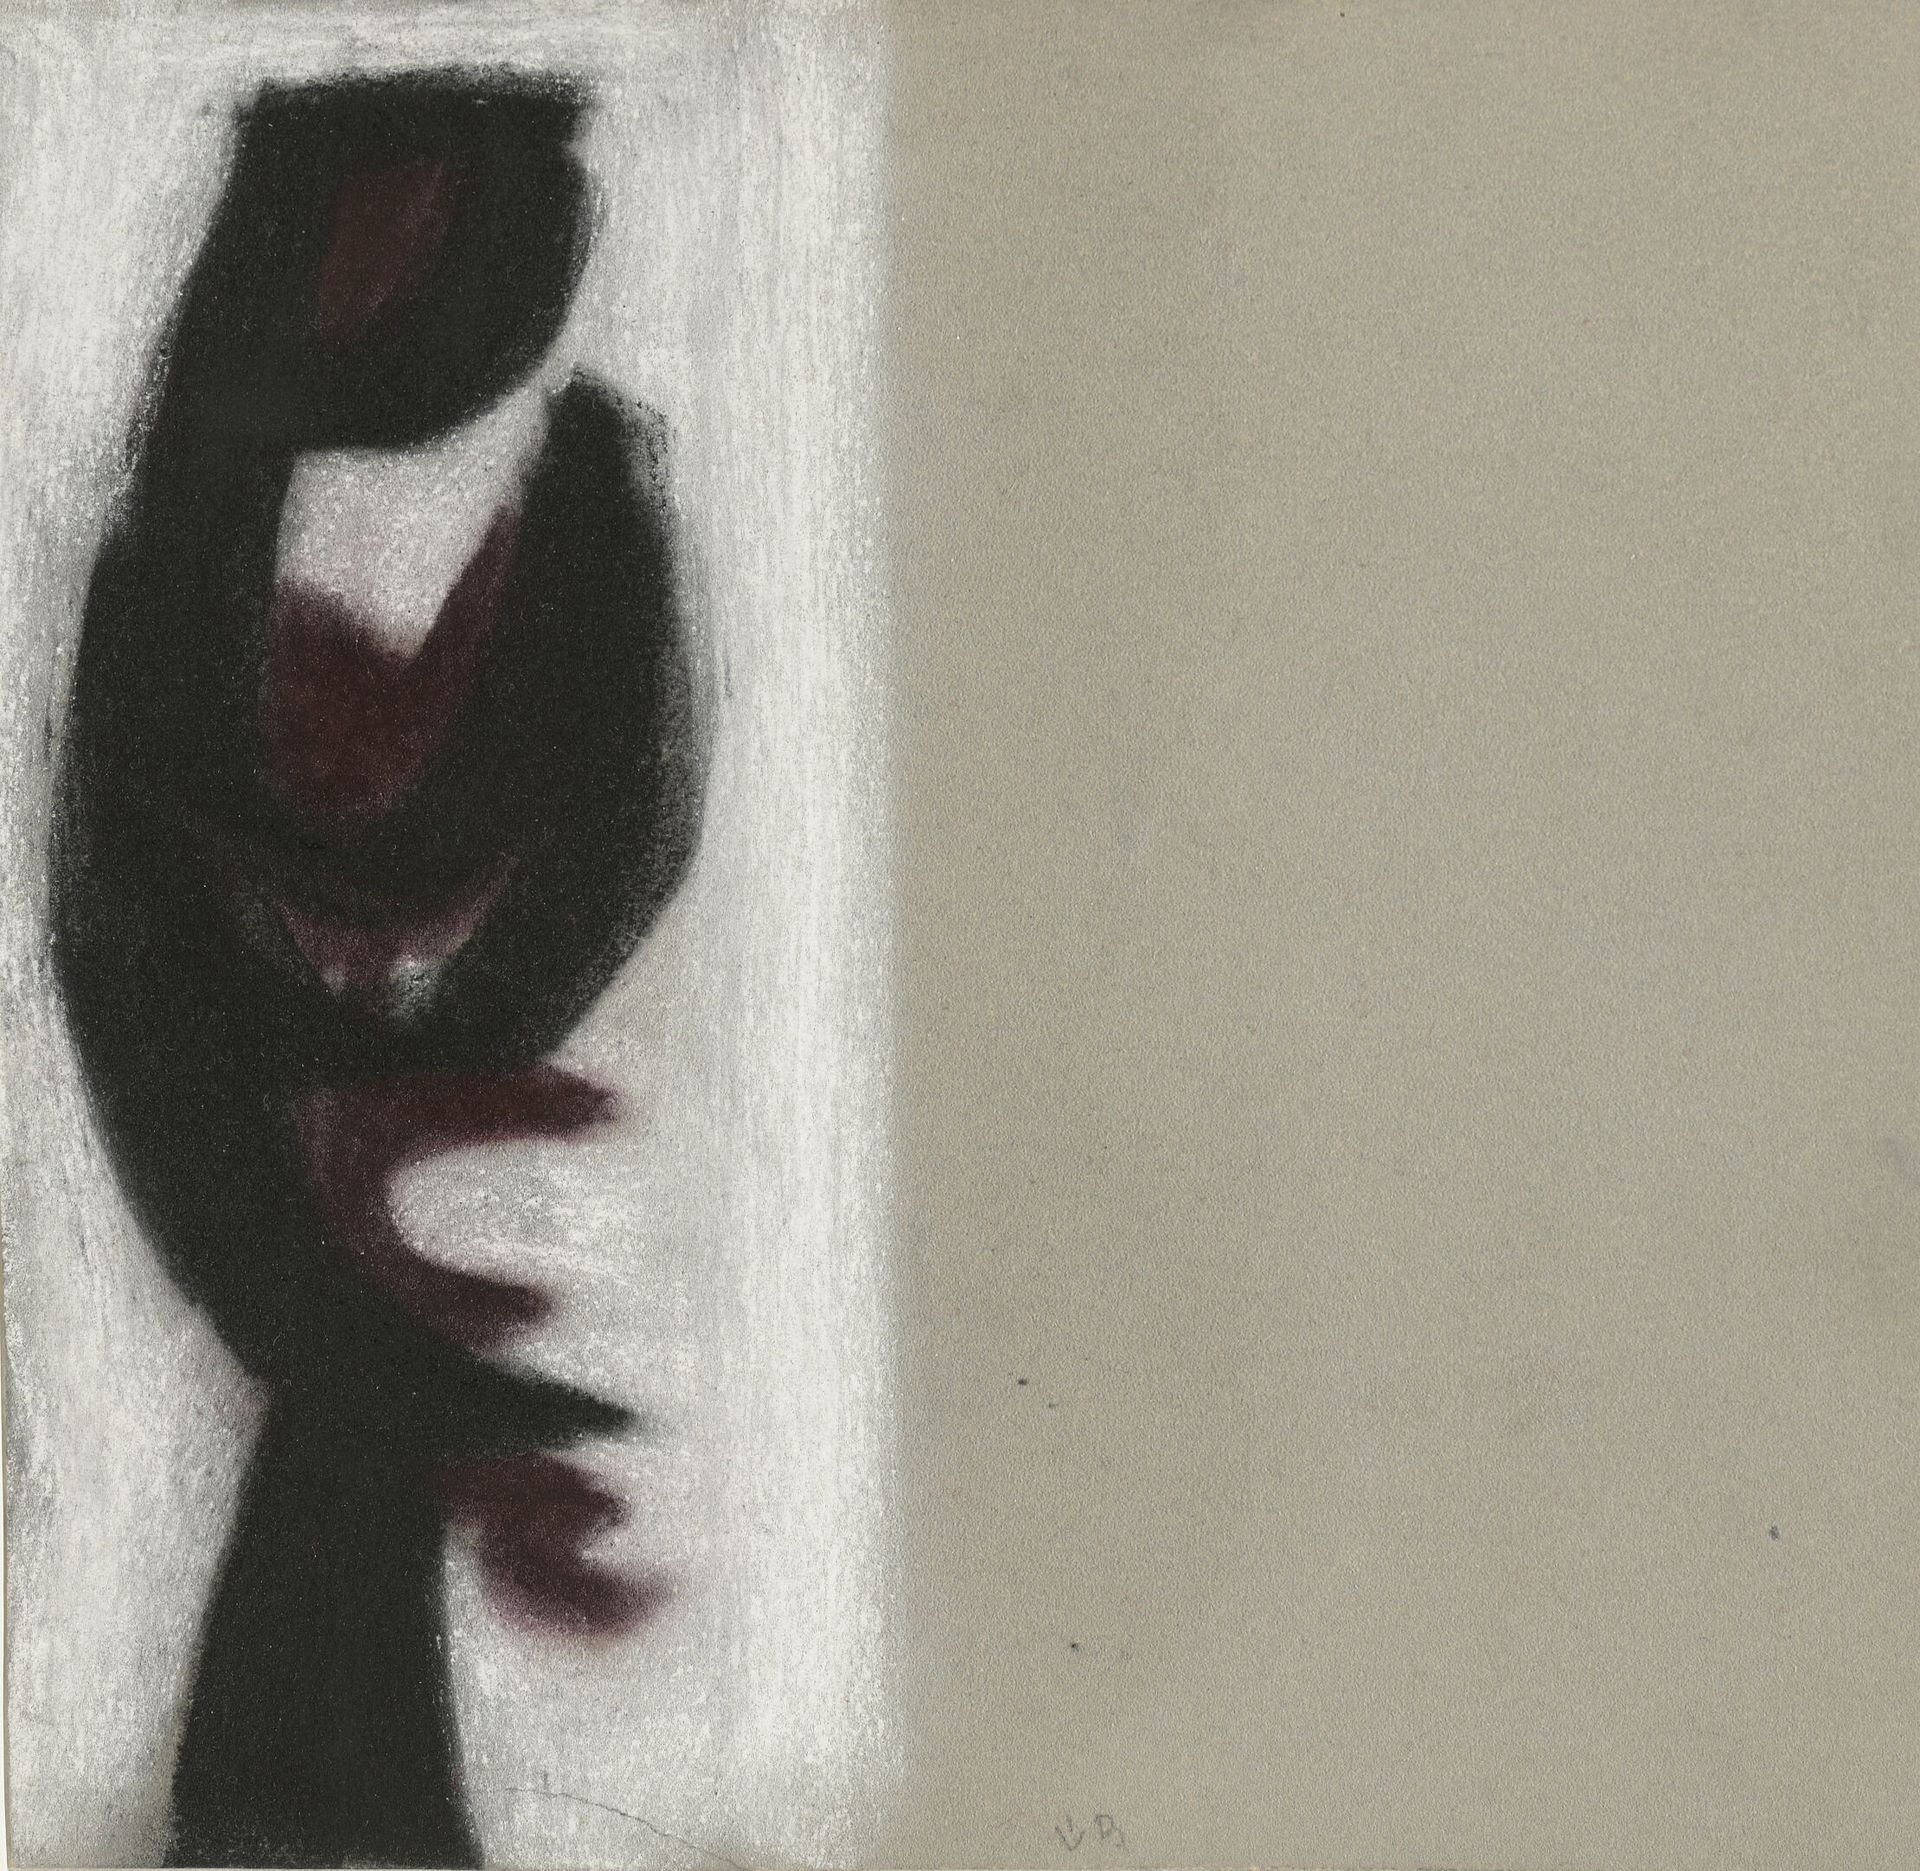 Null 让-米歇尔-阿特兰(1913-1960)

所罗门王的镜子》，1959年

粉彩画，无签名

H.25 cm - W. 25.5 cm



出处 :&hellip;